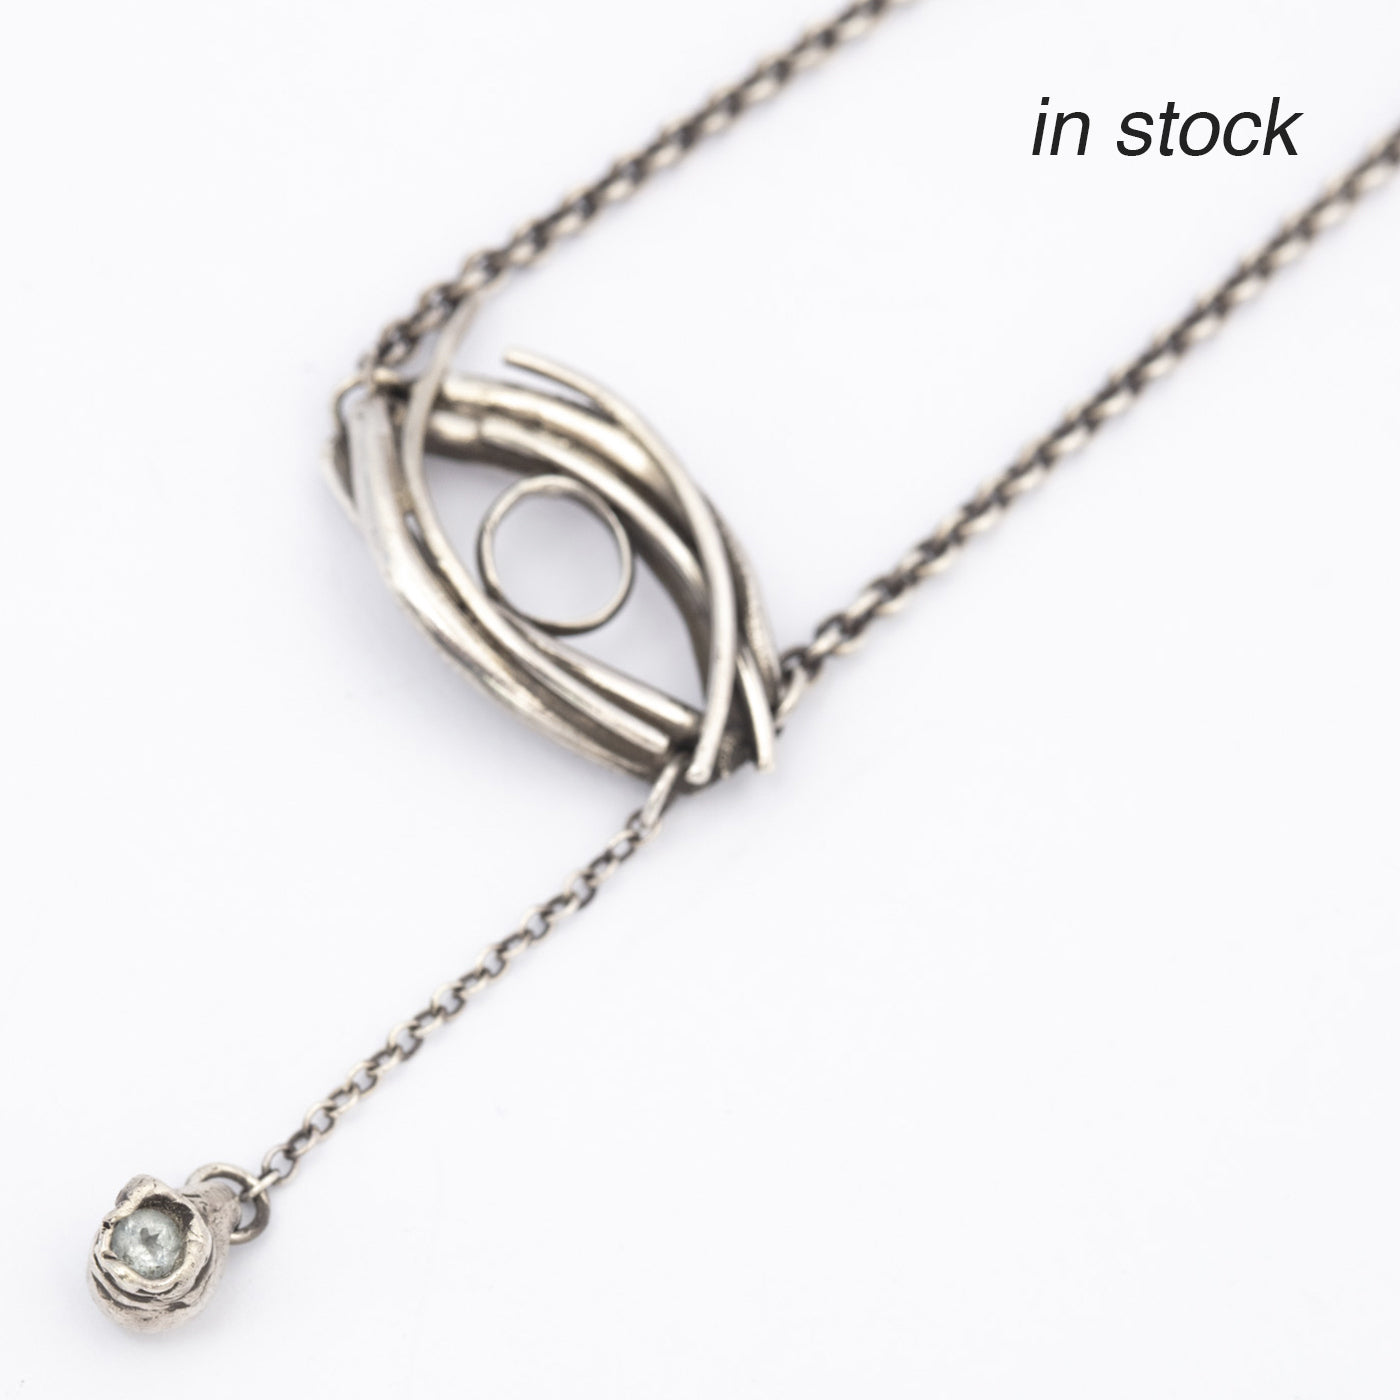 Pendant chain Blue Tear sterling silver blue topaz product image closeup innan jewellery berlin in stock